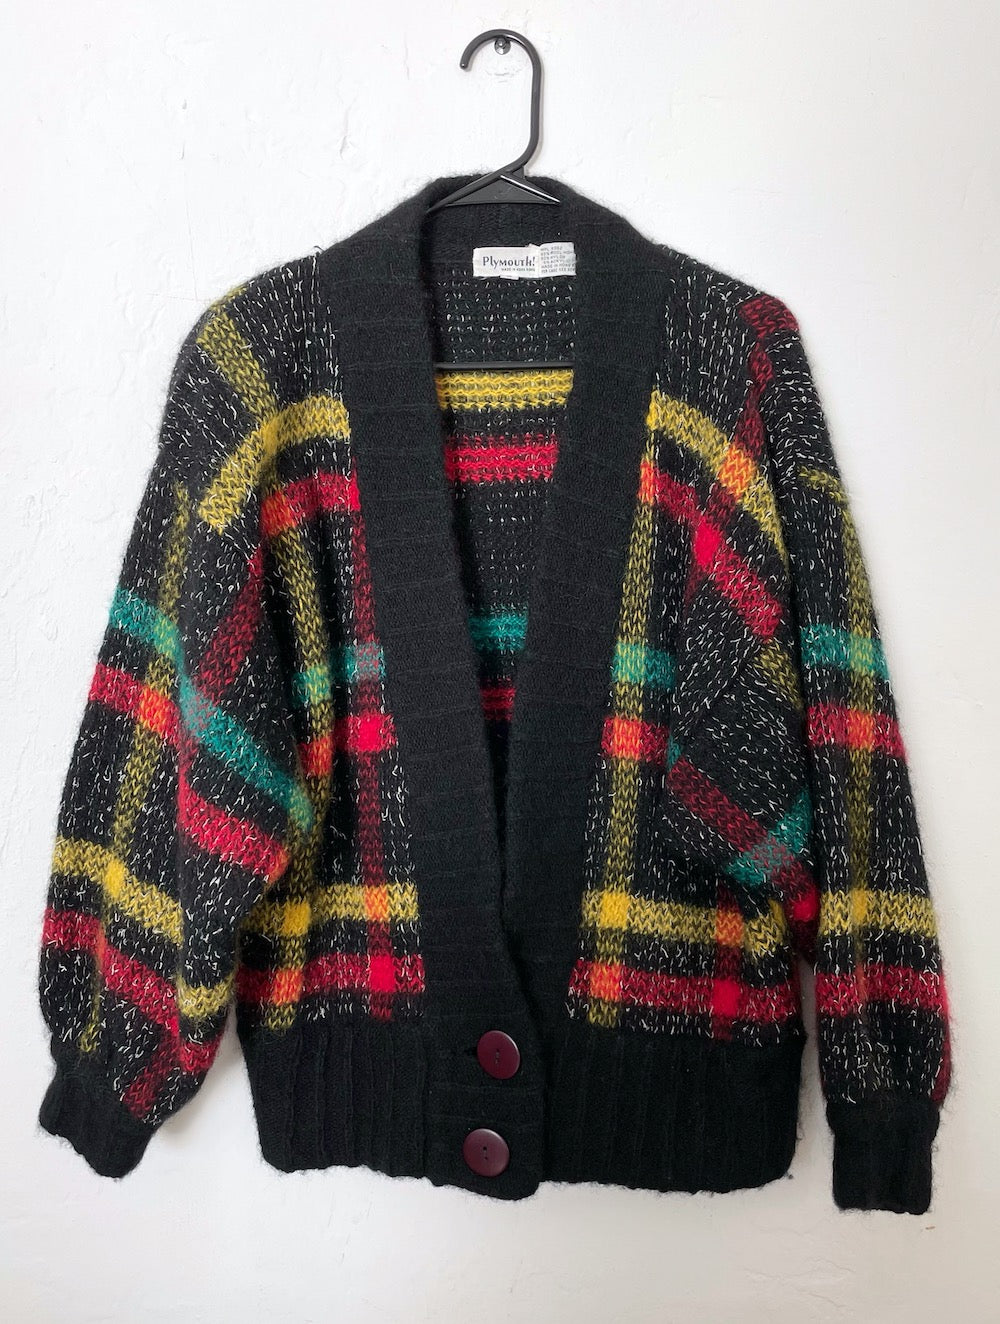 Vintage 80s Chunky Knit Black and Plaid Cardigan